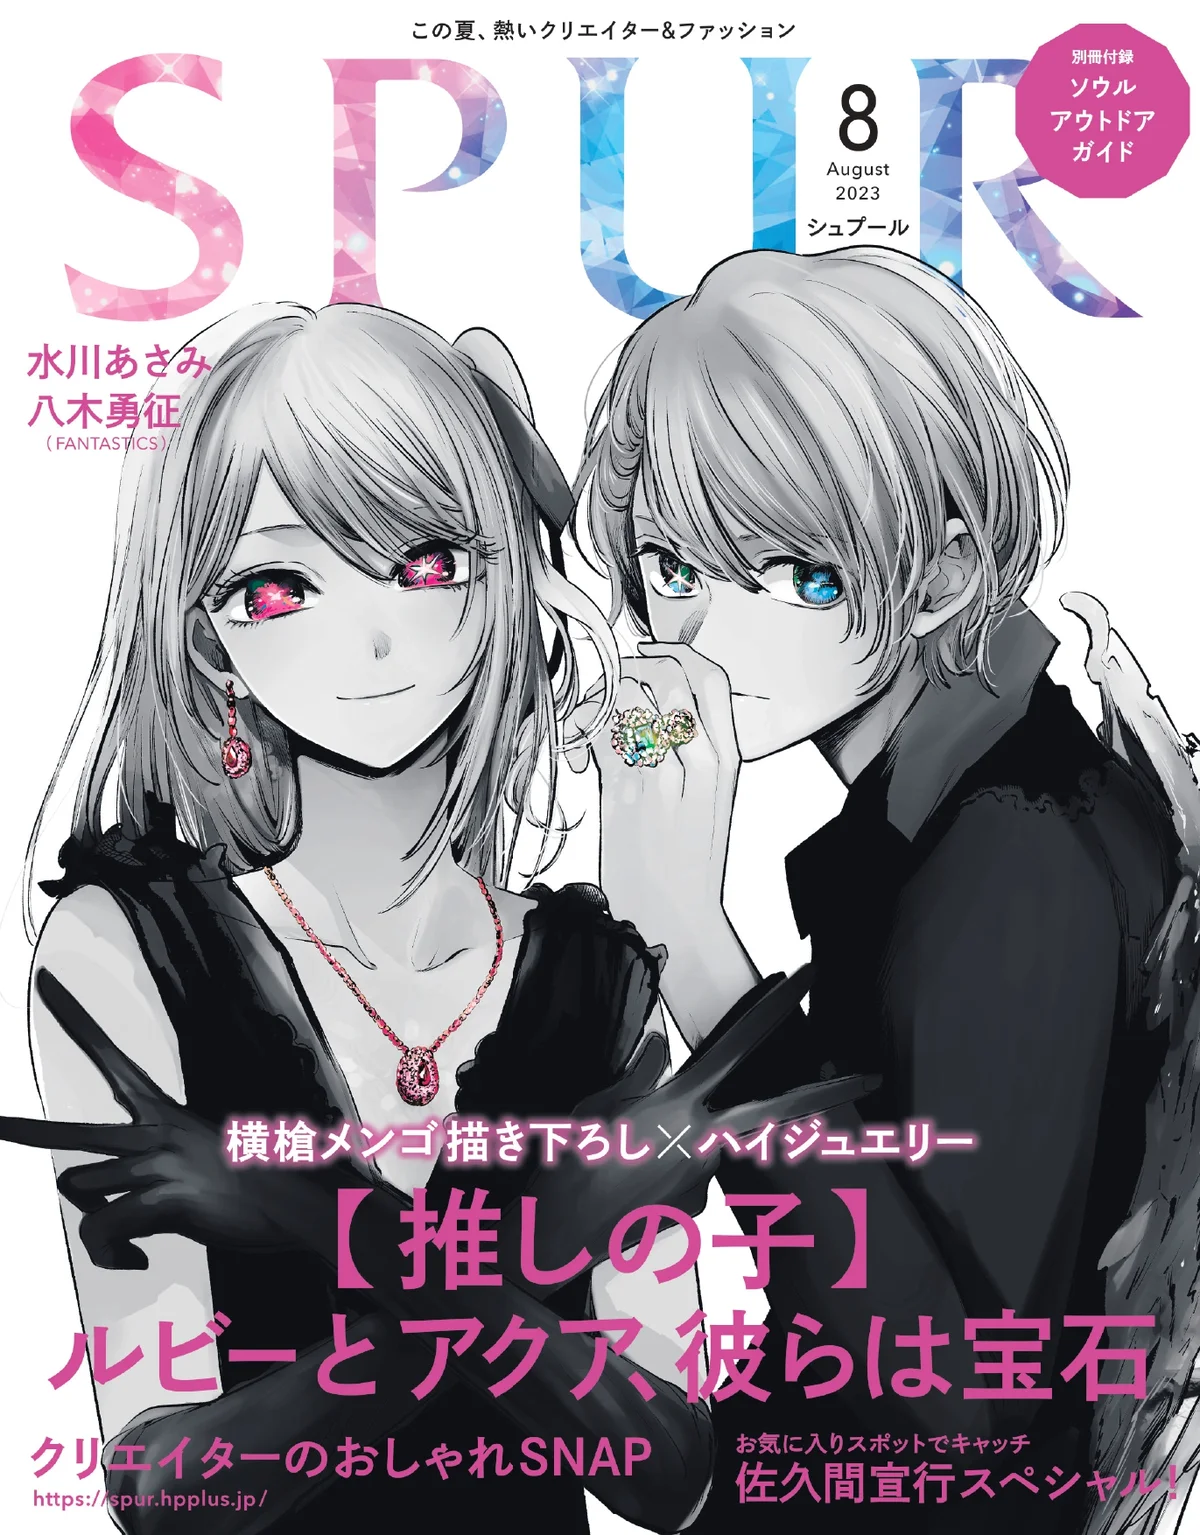 Aqua Hoshino y Ruby Hoshino de OSHI NO KO adornan la portada de la revista SPUR para agosto de 2023.